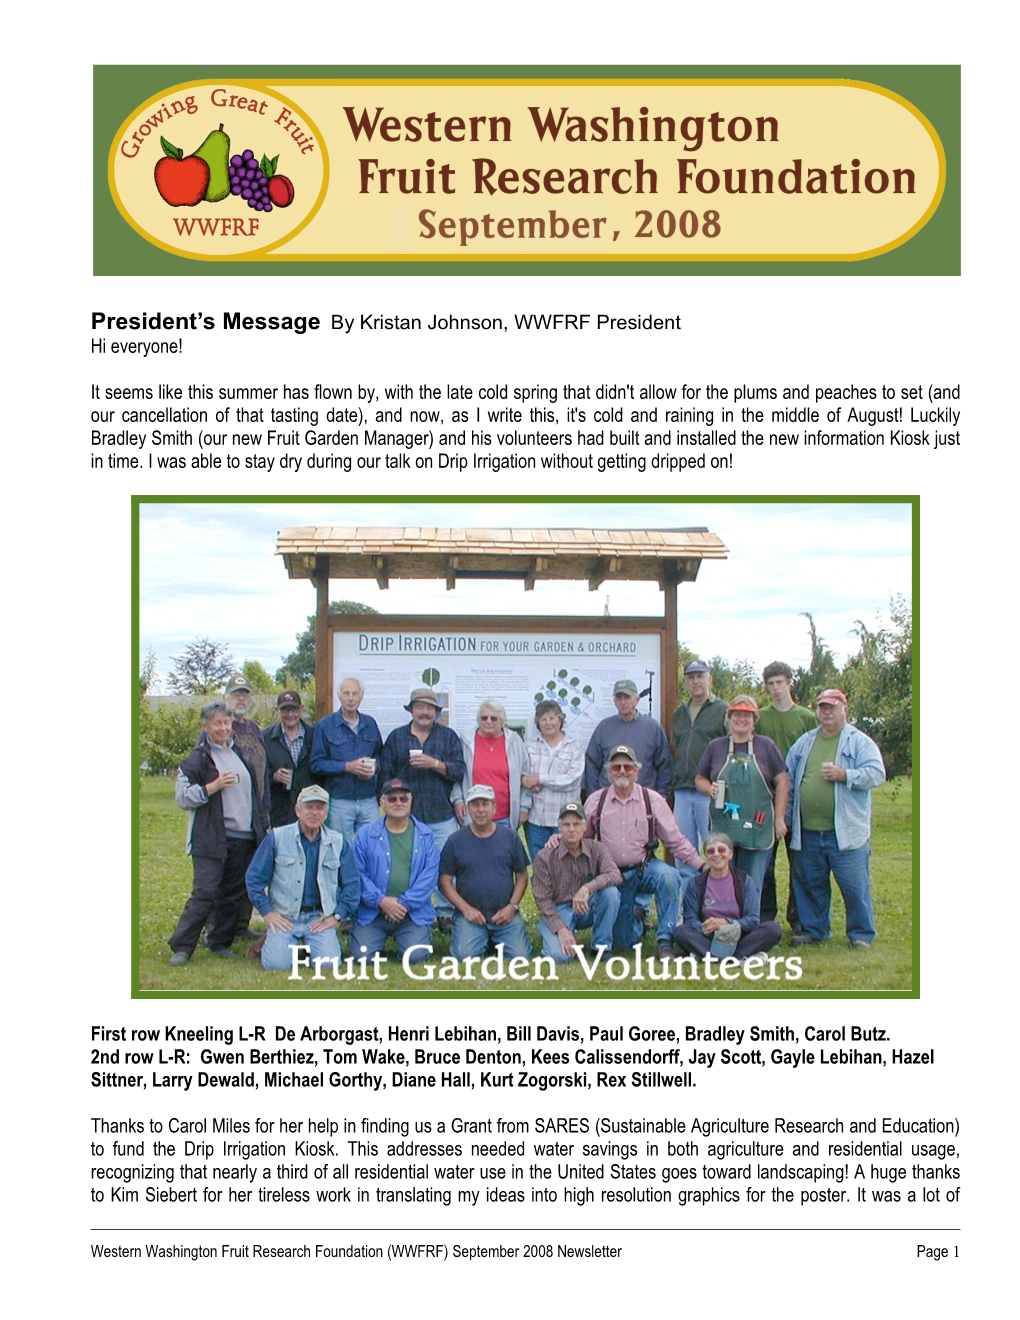 Western Washington Fruit Research Foundation Newsletter